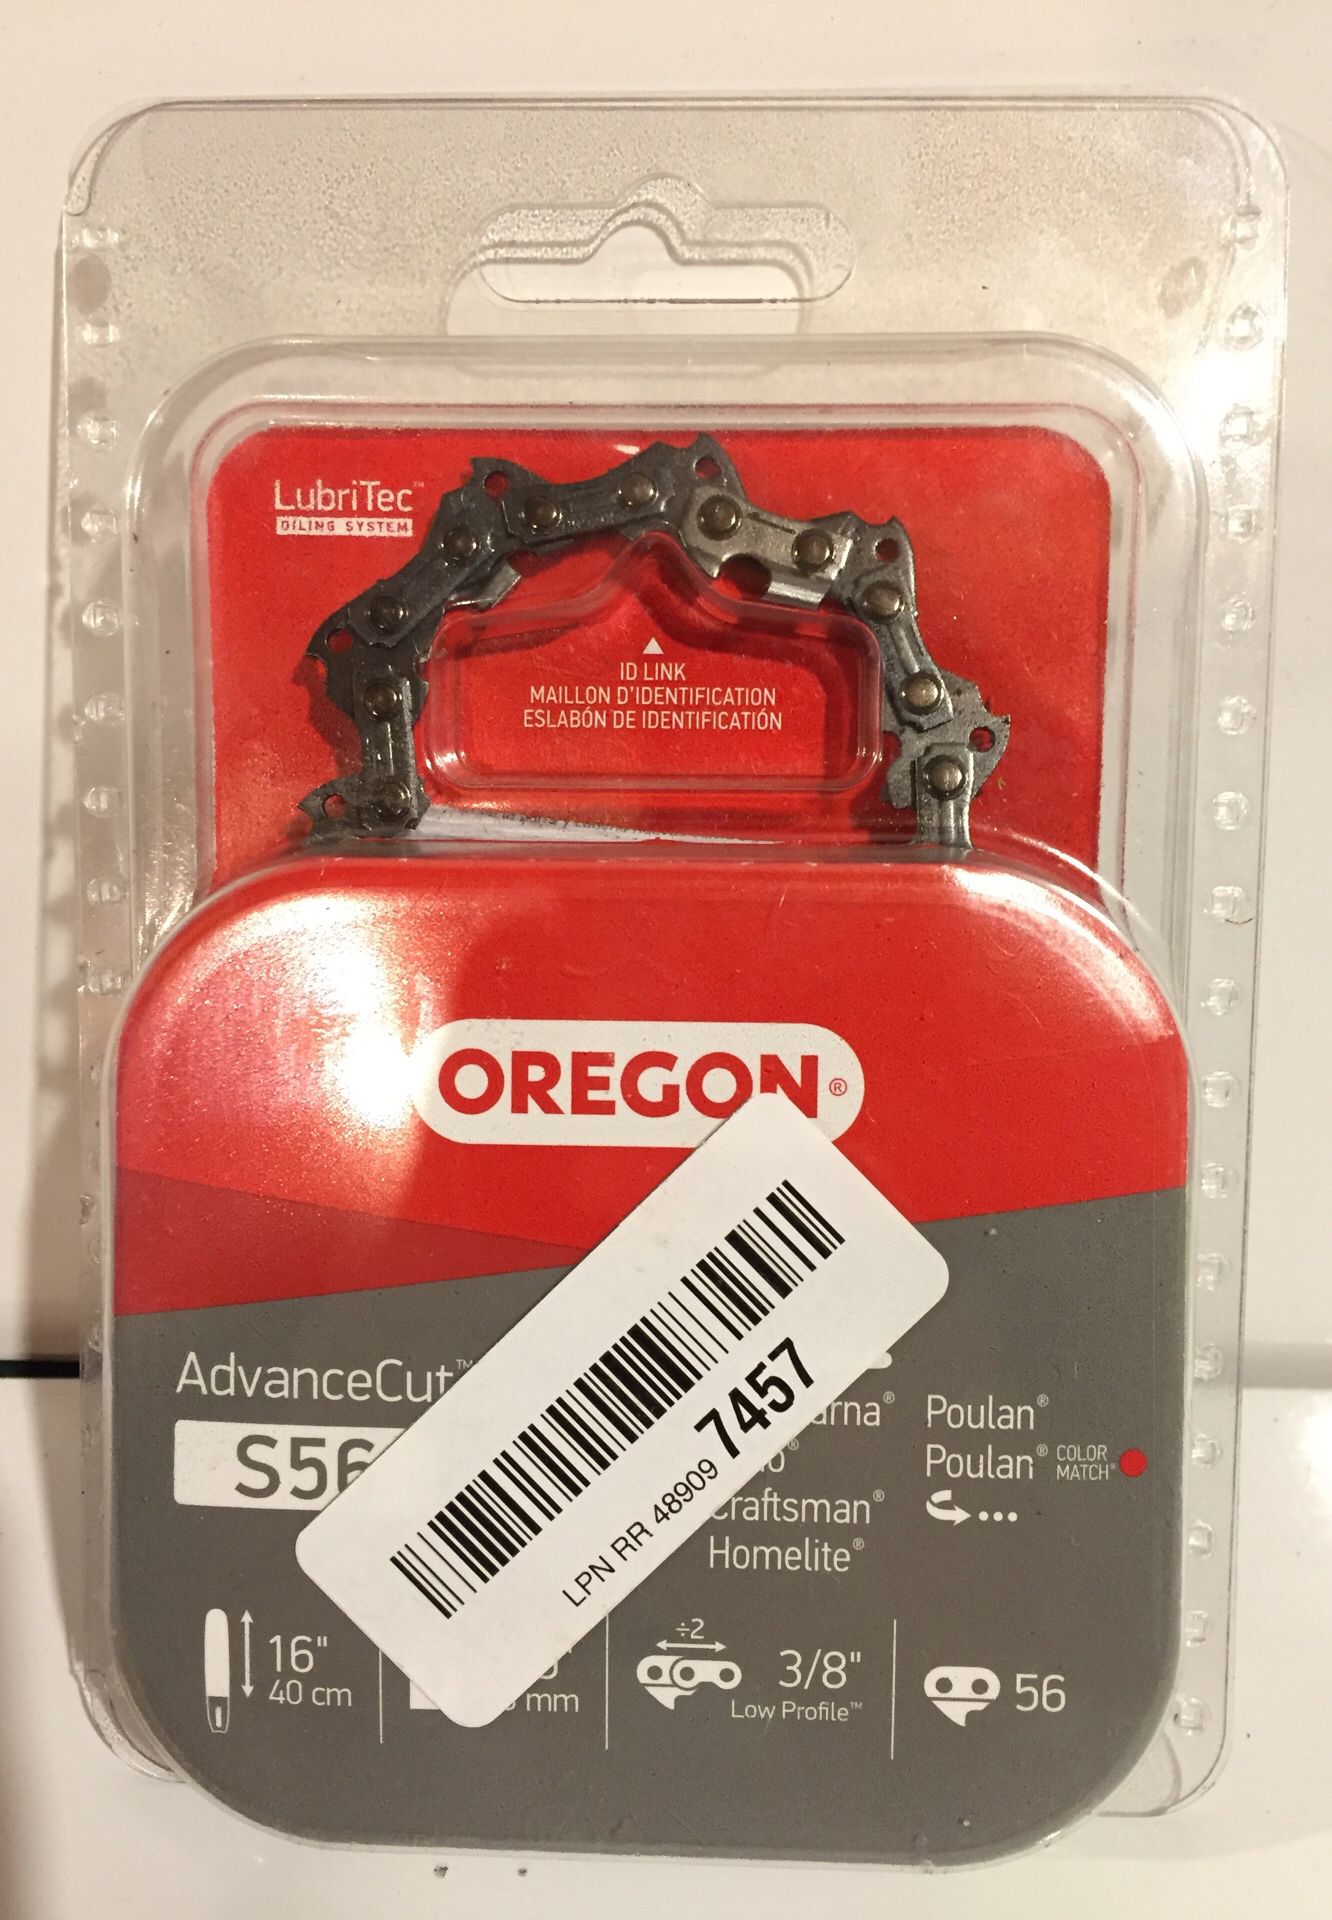 Oregon S56 Advance Cut 16" chainsaw blade